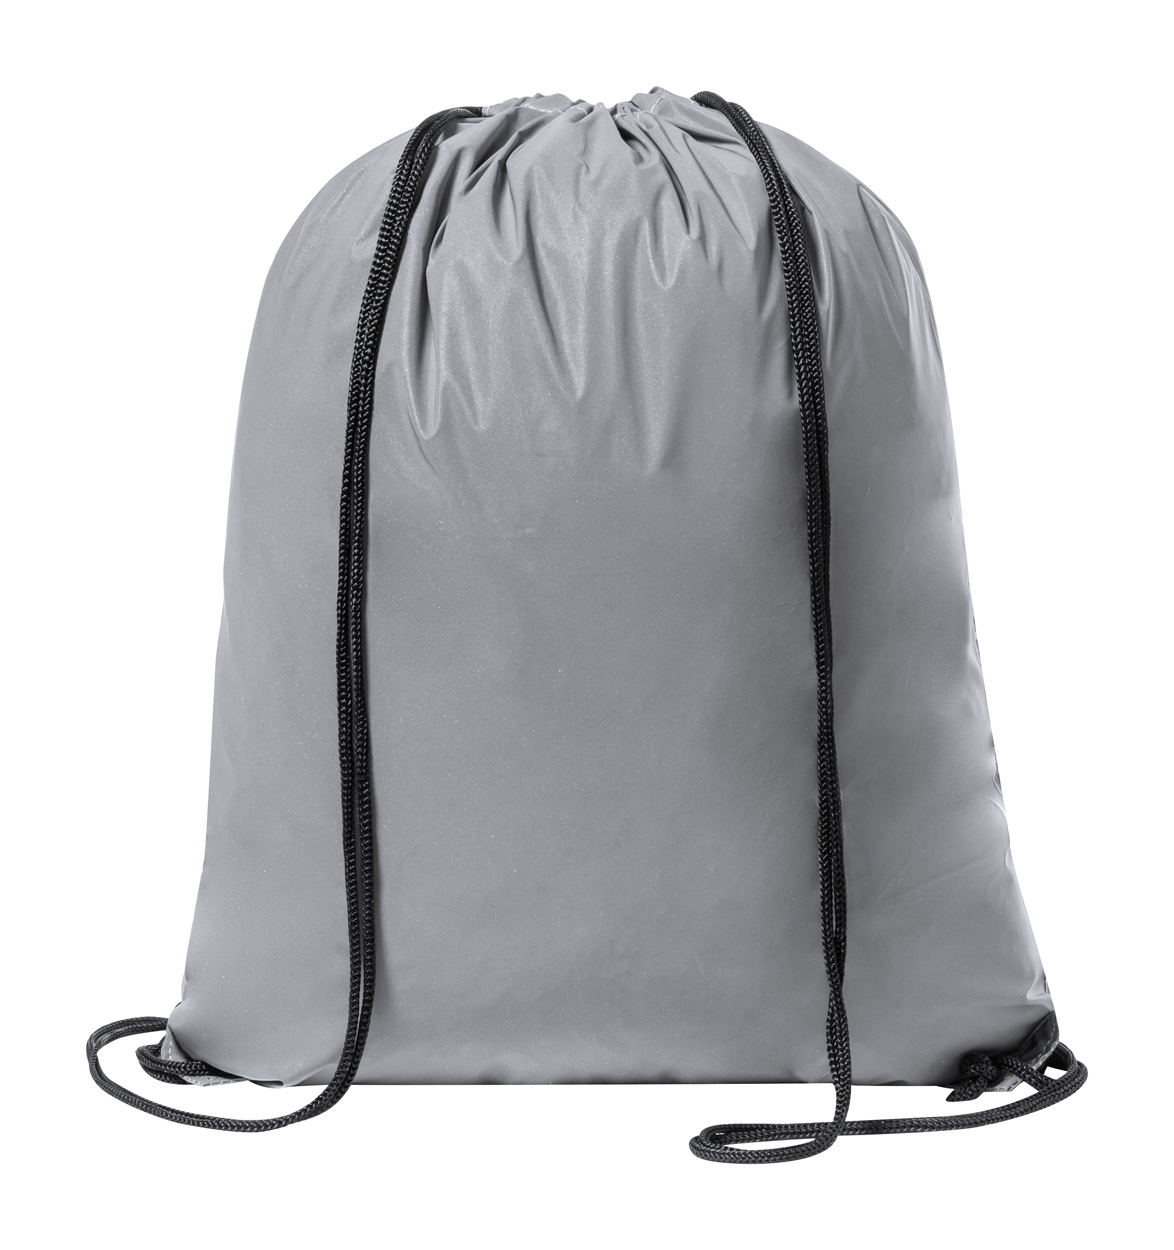 Bayolet reflective drawstring bag - grey